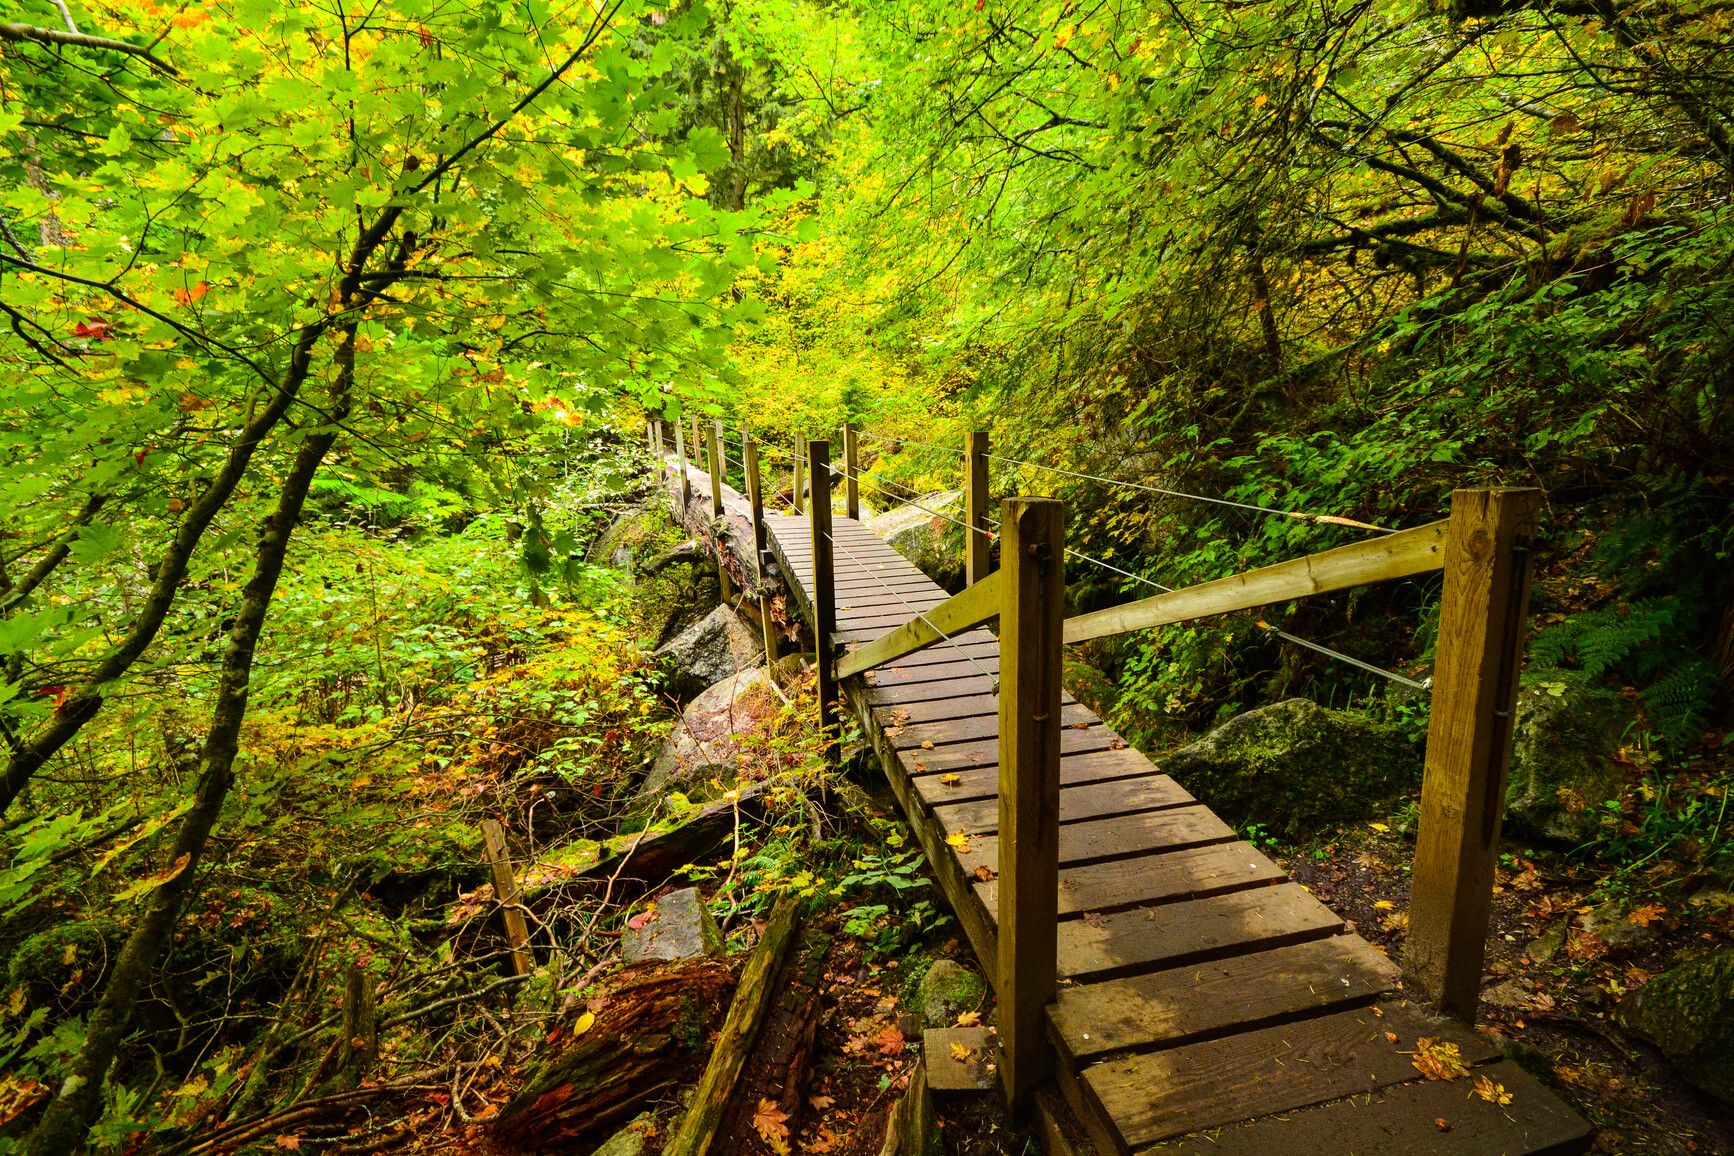 A footbridge through the forest in Sx̱ótsaqel/Chilliwack Lake Park.